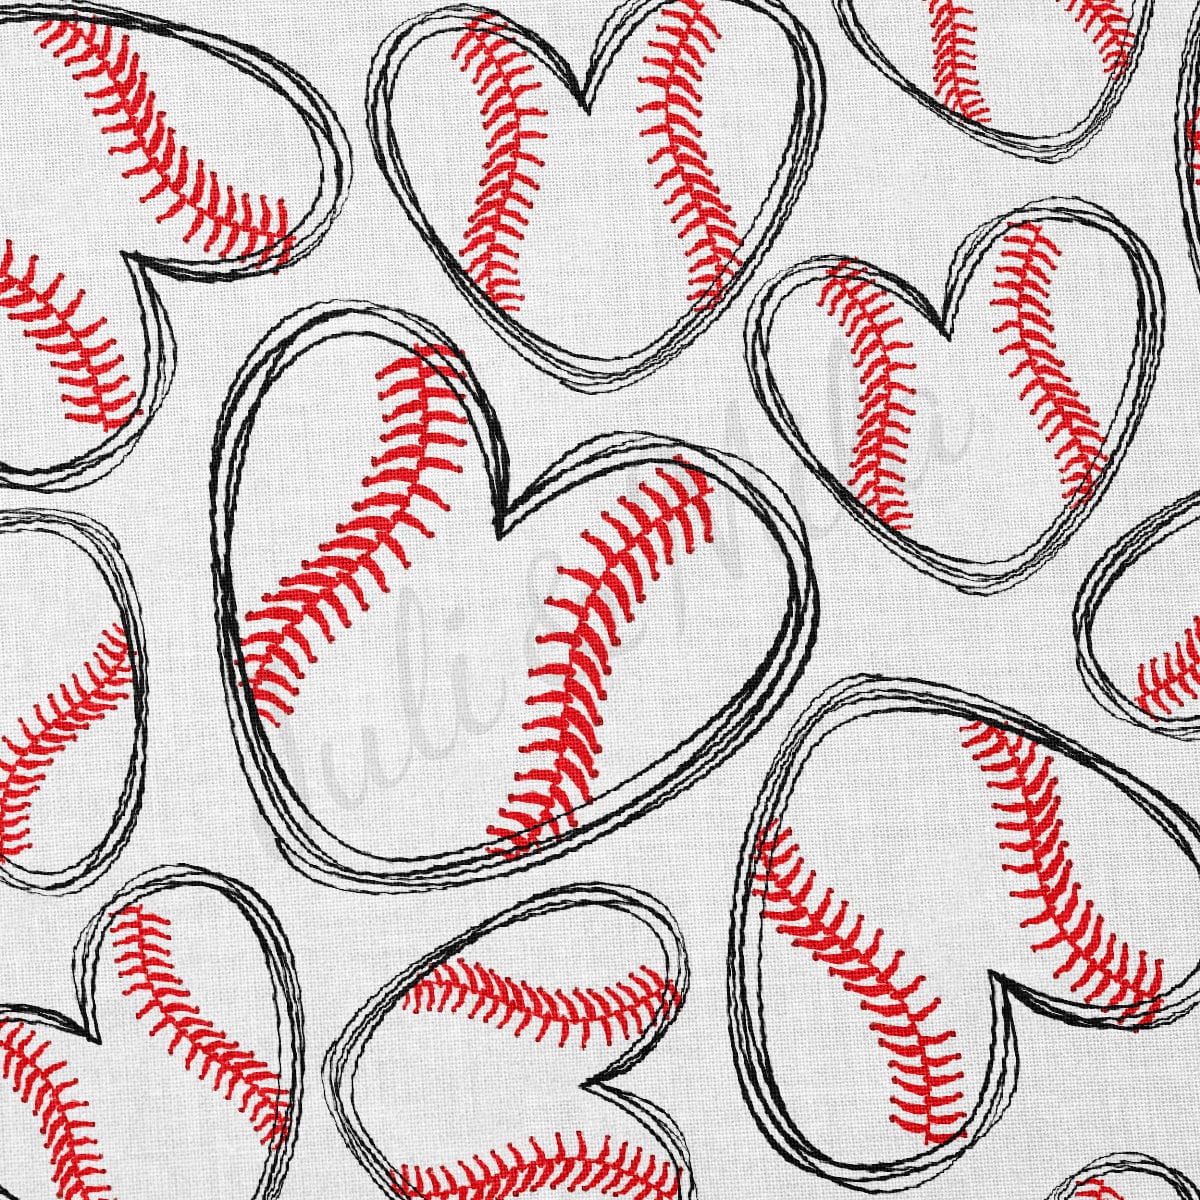 100% Cotton Fabric CTN227 Baseball